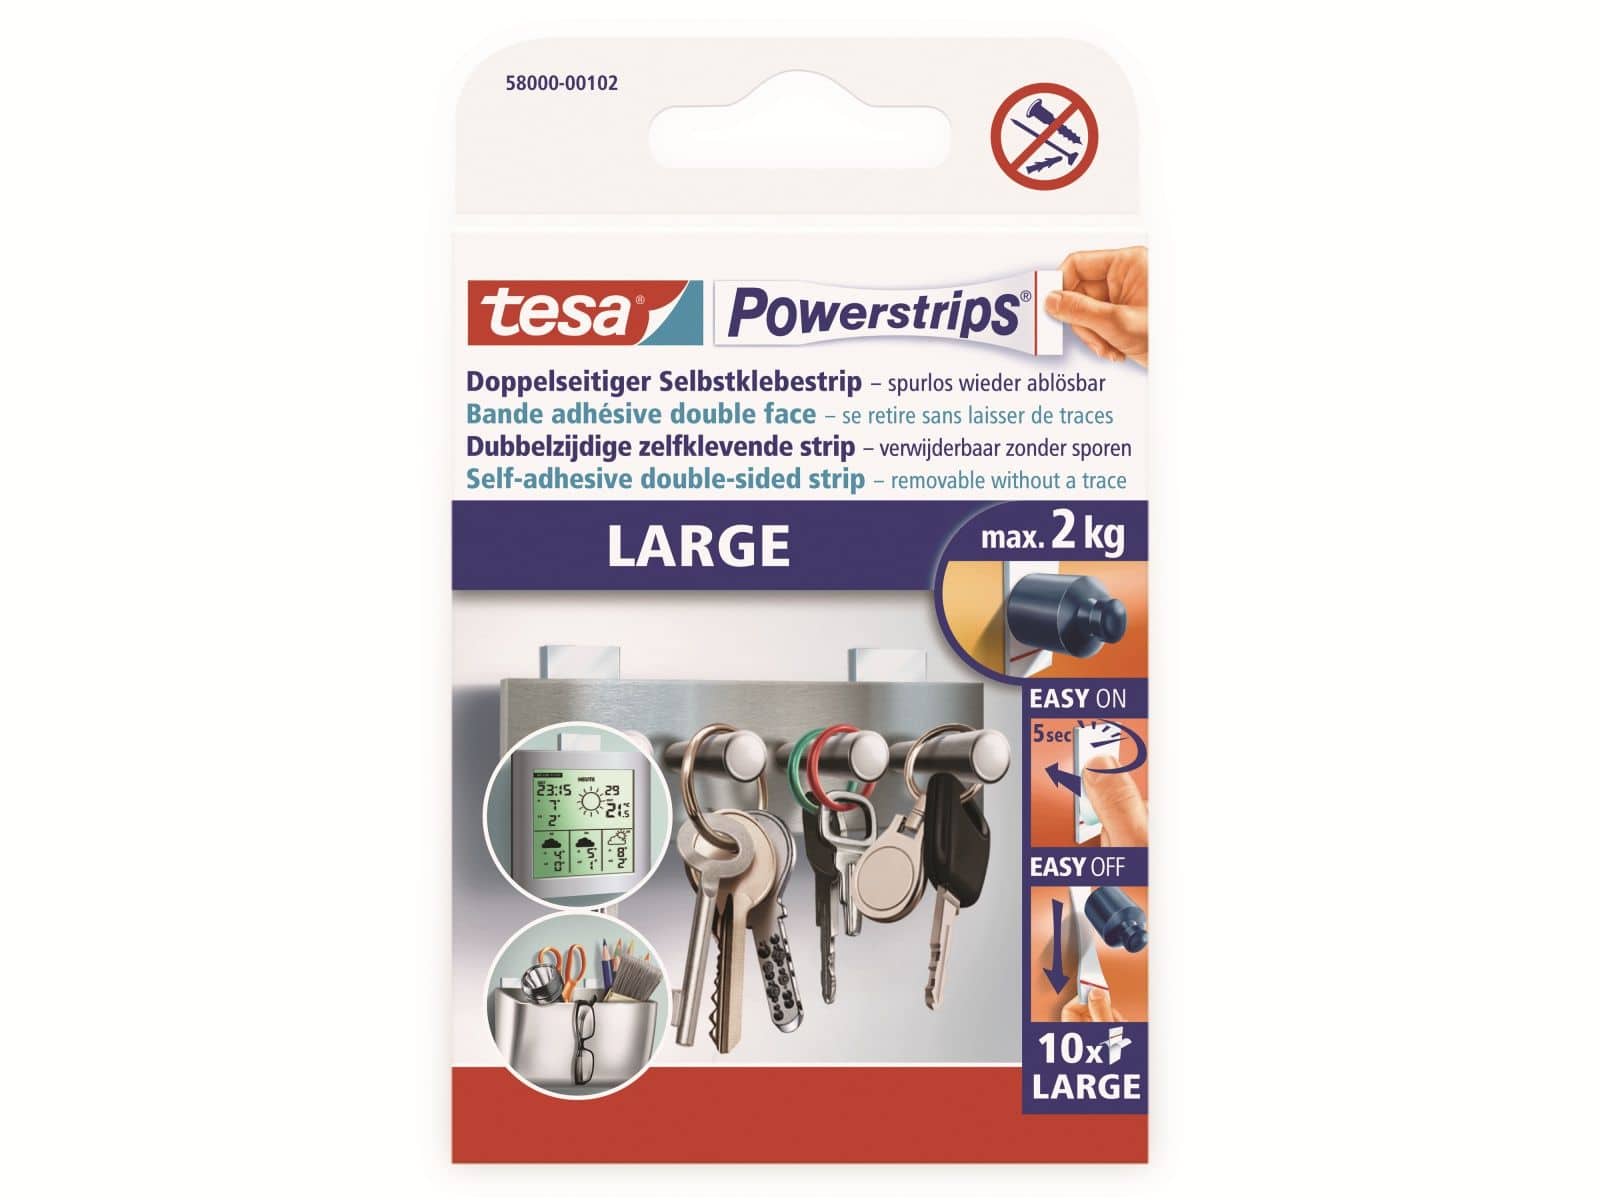 TESA Powerstrips® Large, 58000-00102-23 von Tesa